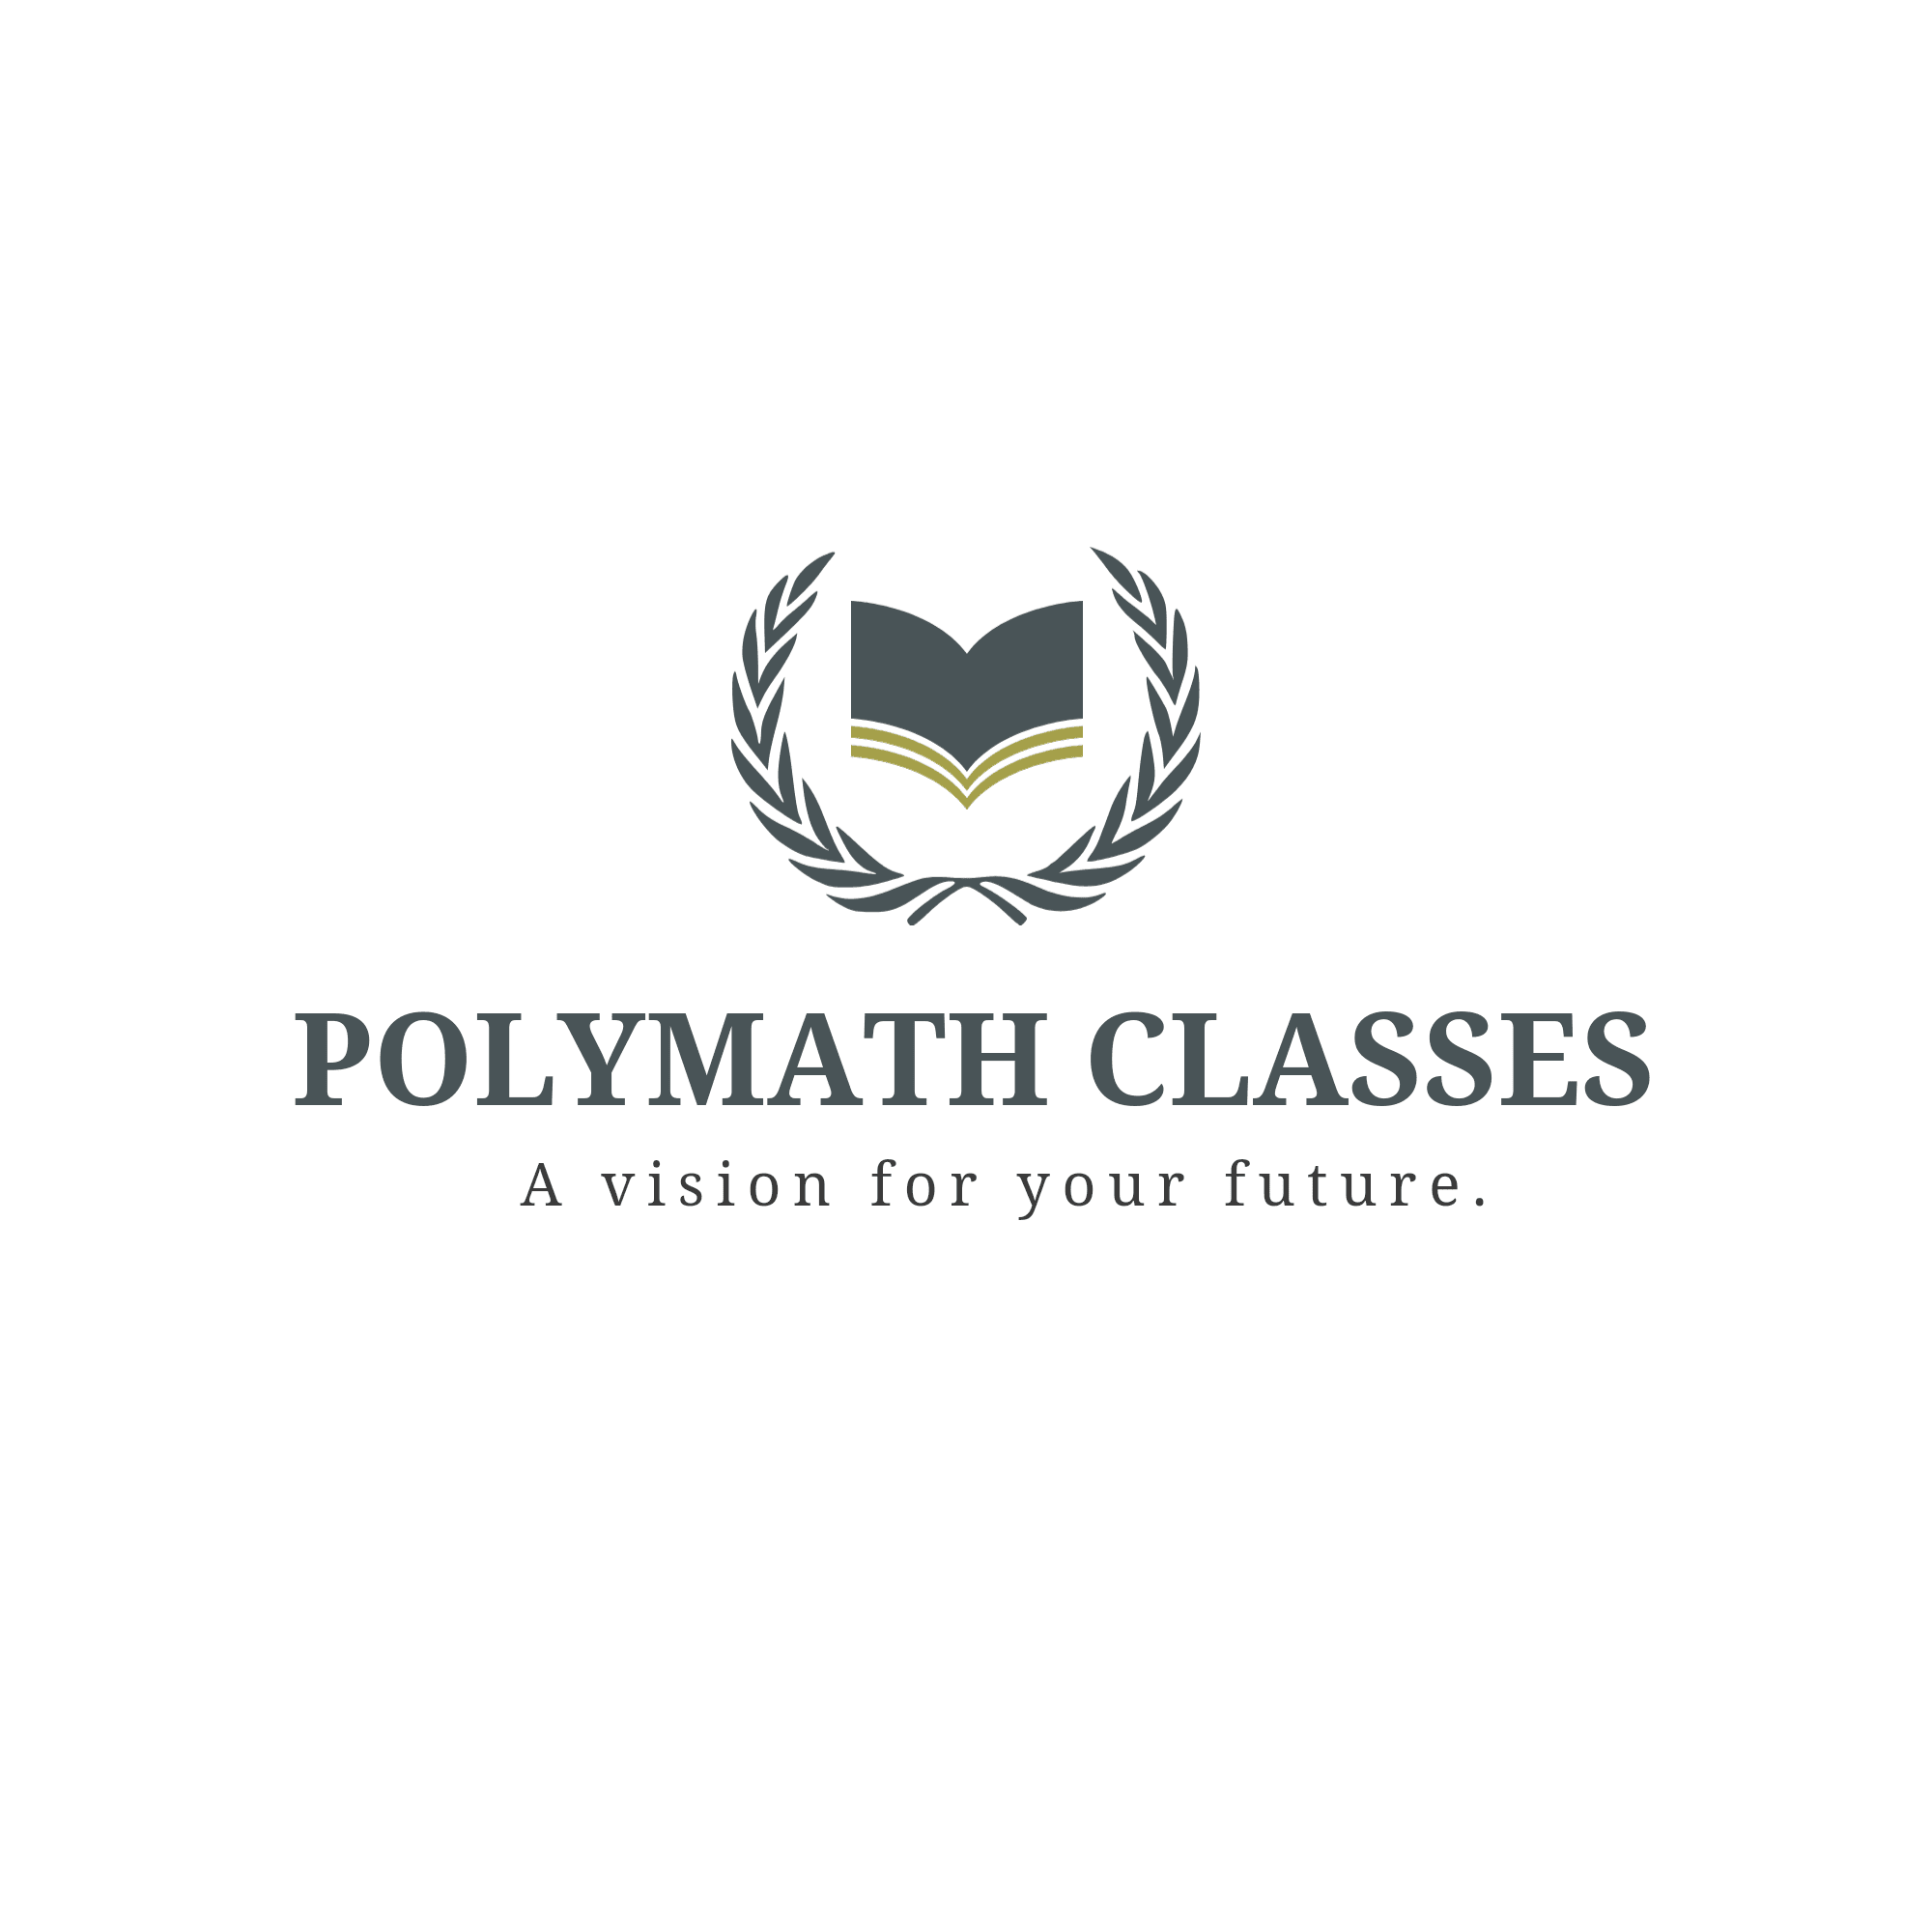 Polymath Classes